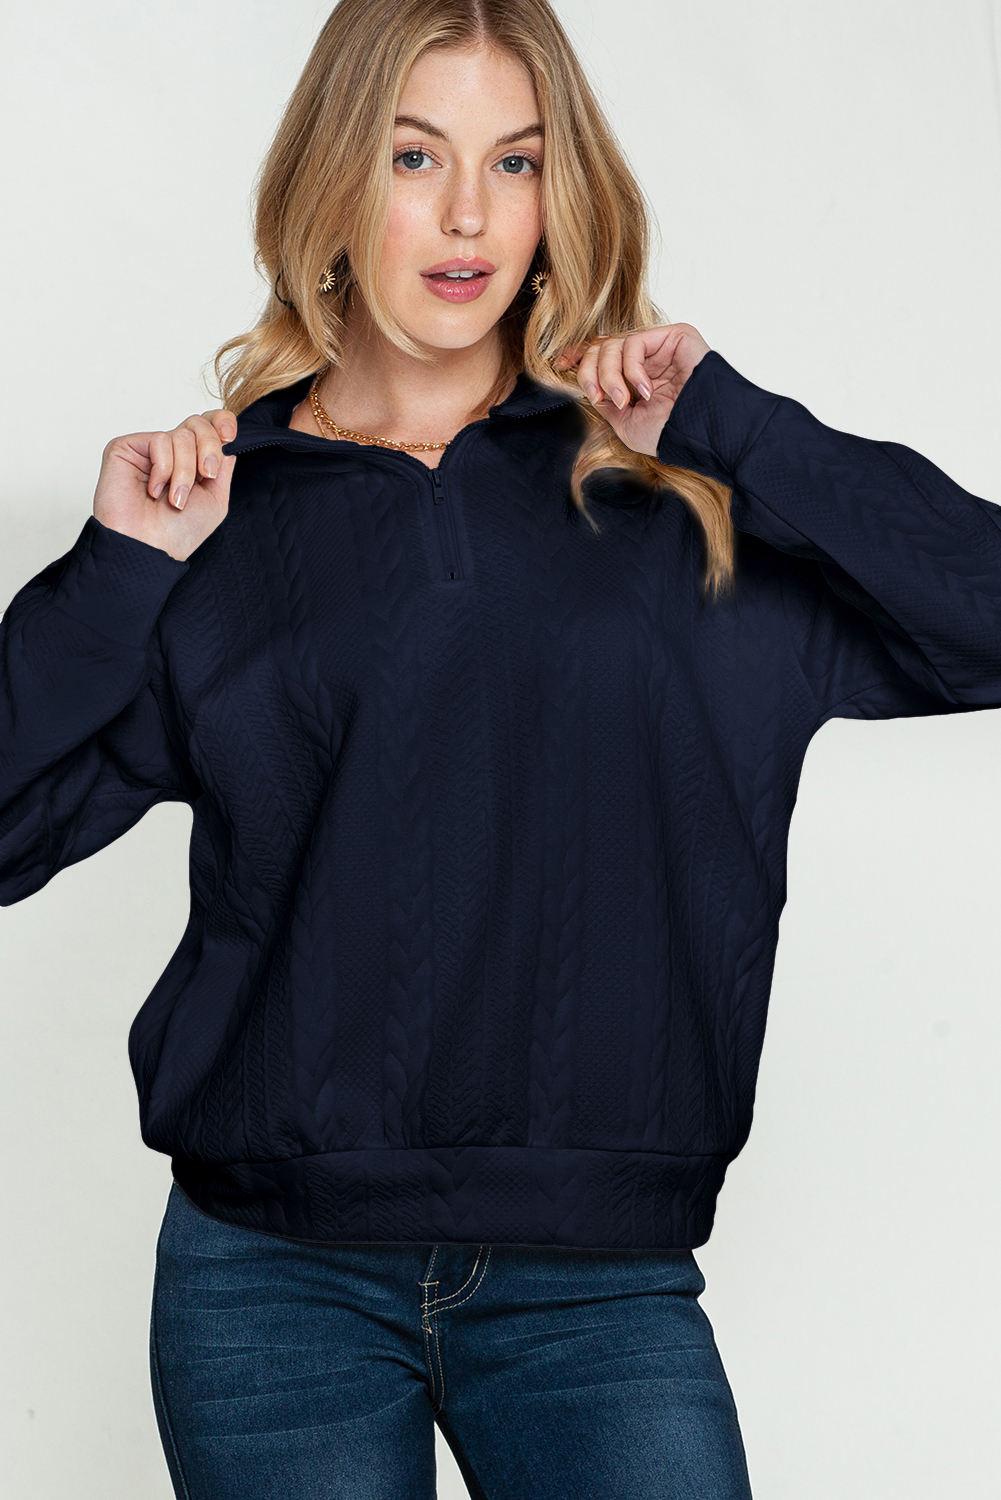  Black Blue Casual Textured 1/4 Zipper Pullover Sweatshirt